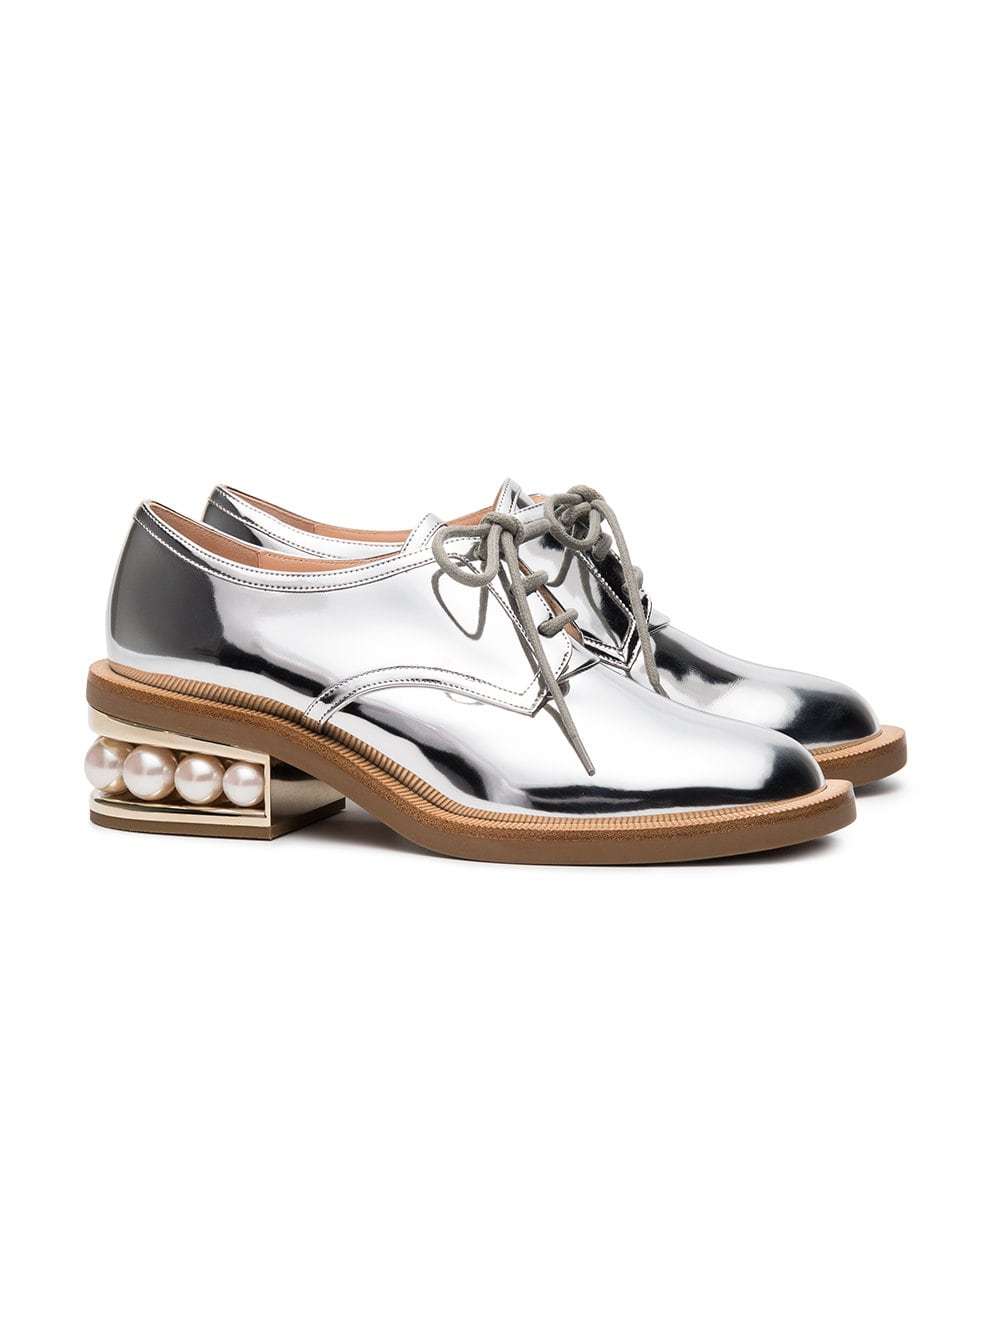 Nicholas Kirkwood, Shoes, Nicholas Kirkwood Casati Pearl Pumps 375 945